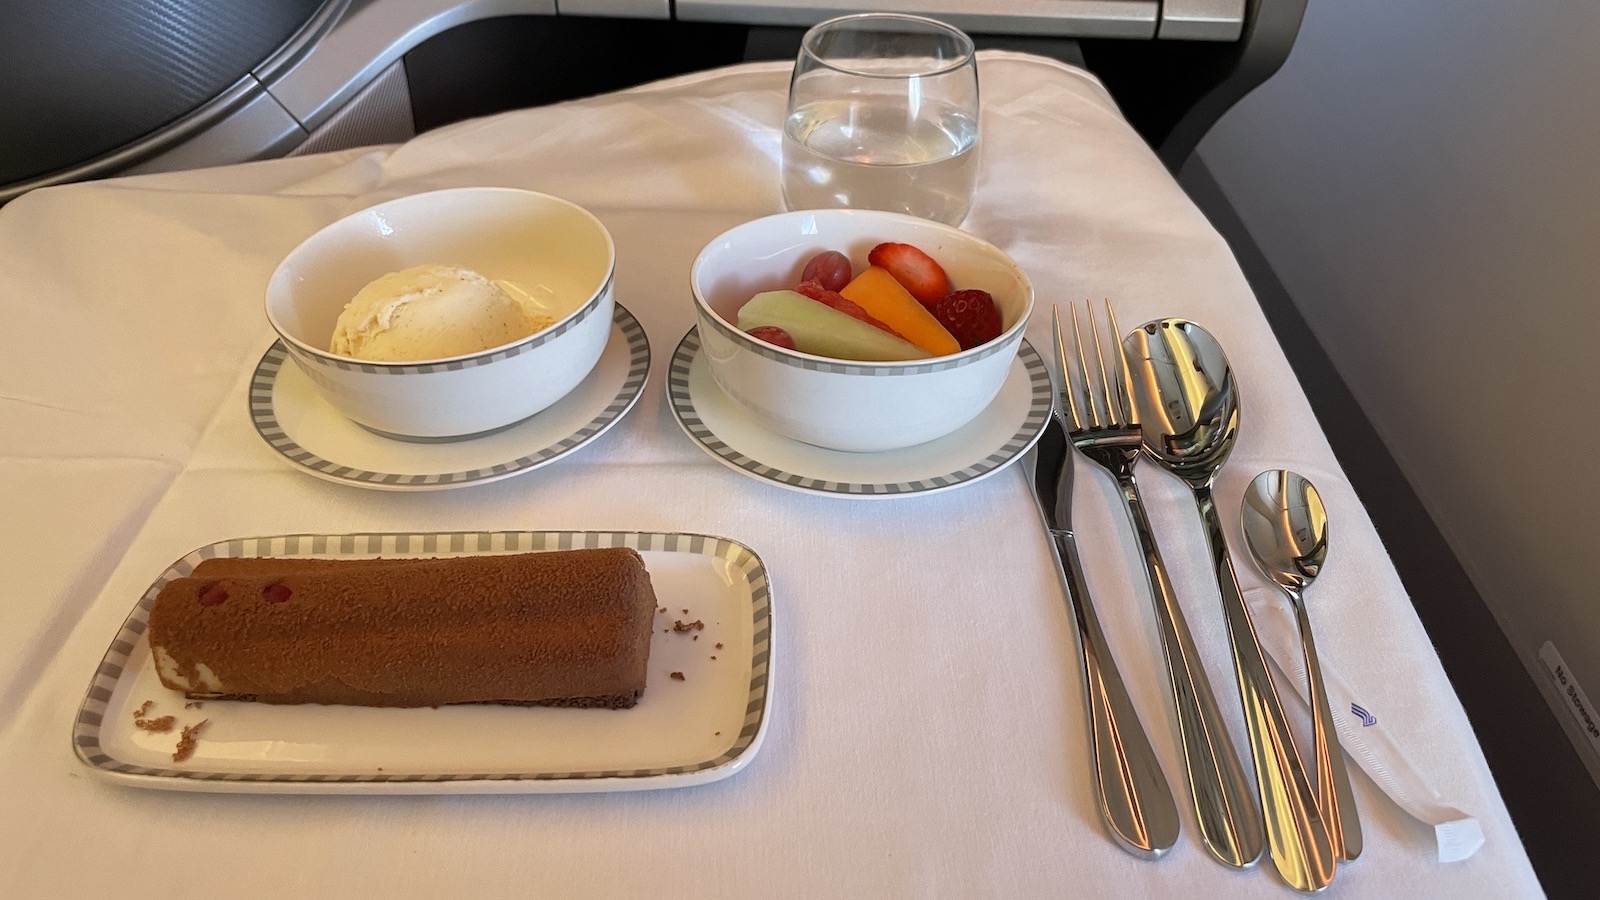 Singapore Airlines Business Class Dessert Cookies & Cream Cheesecake, Vanilla Ice-cream and Fruit